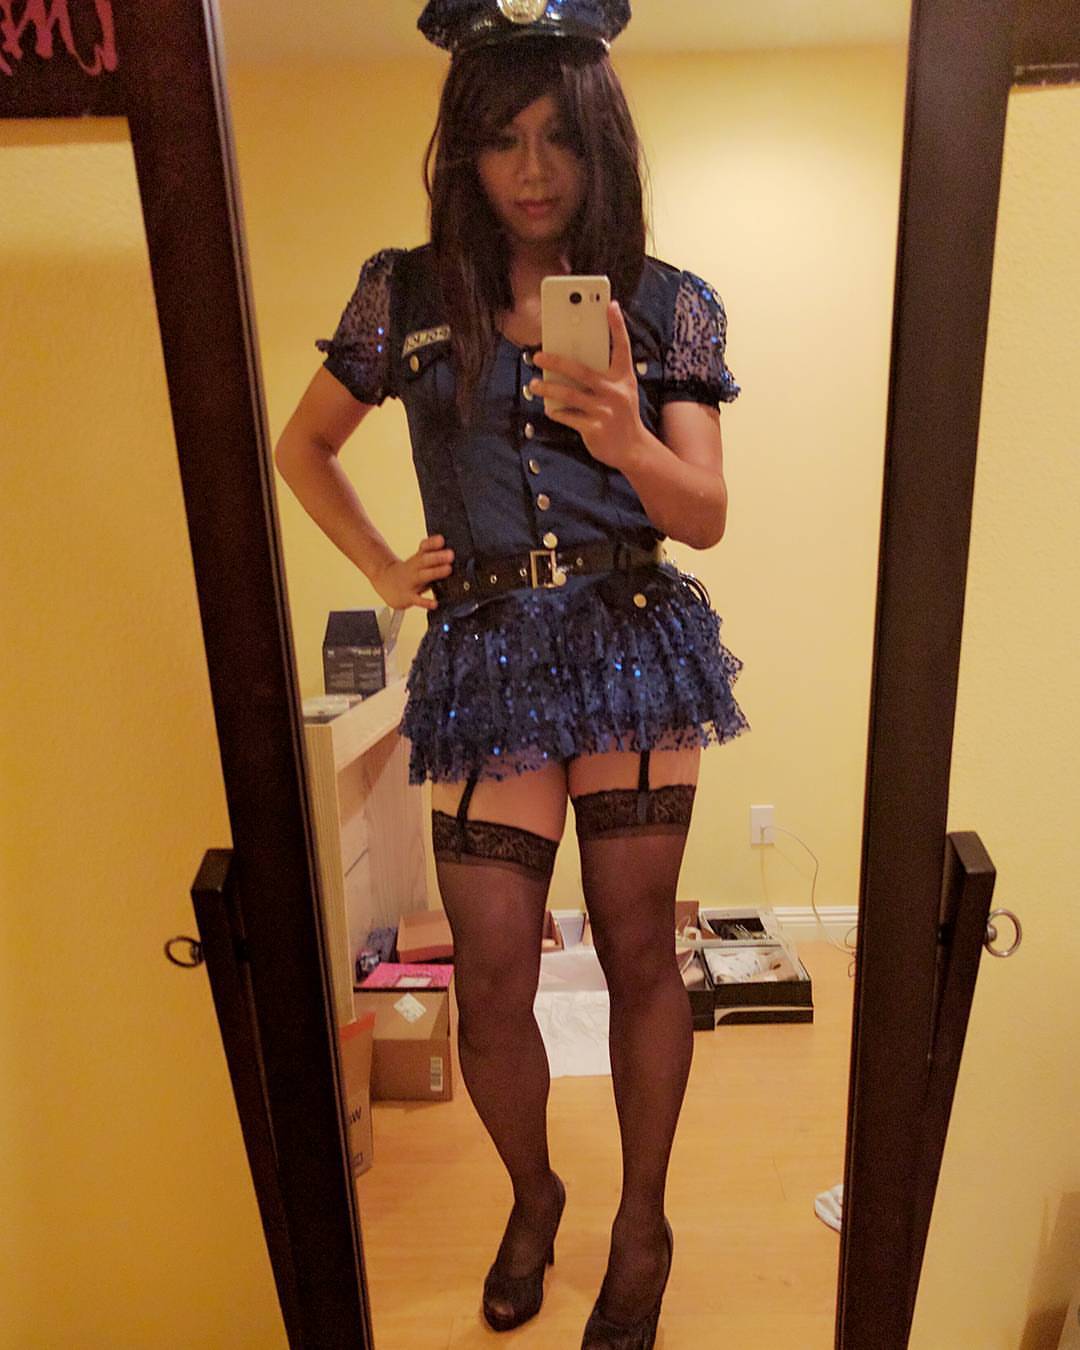 allison-li:  Costume contest at my local t-girl club last night. Went as a stripper